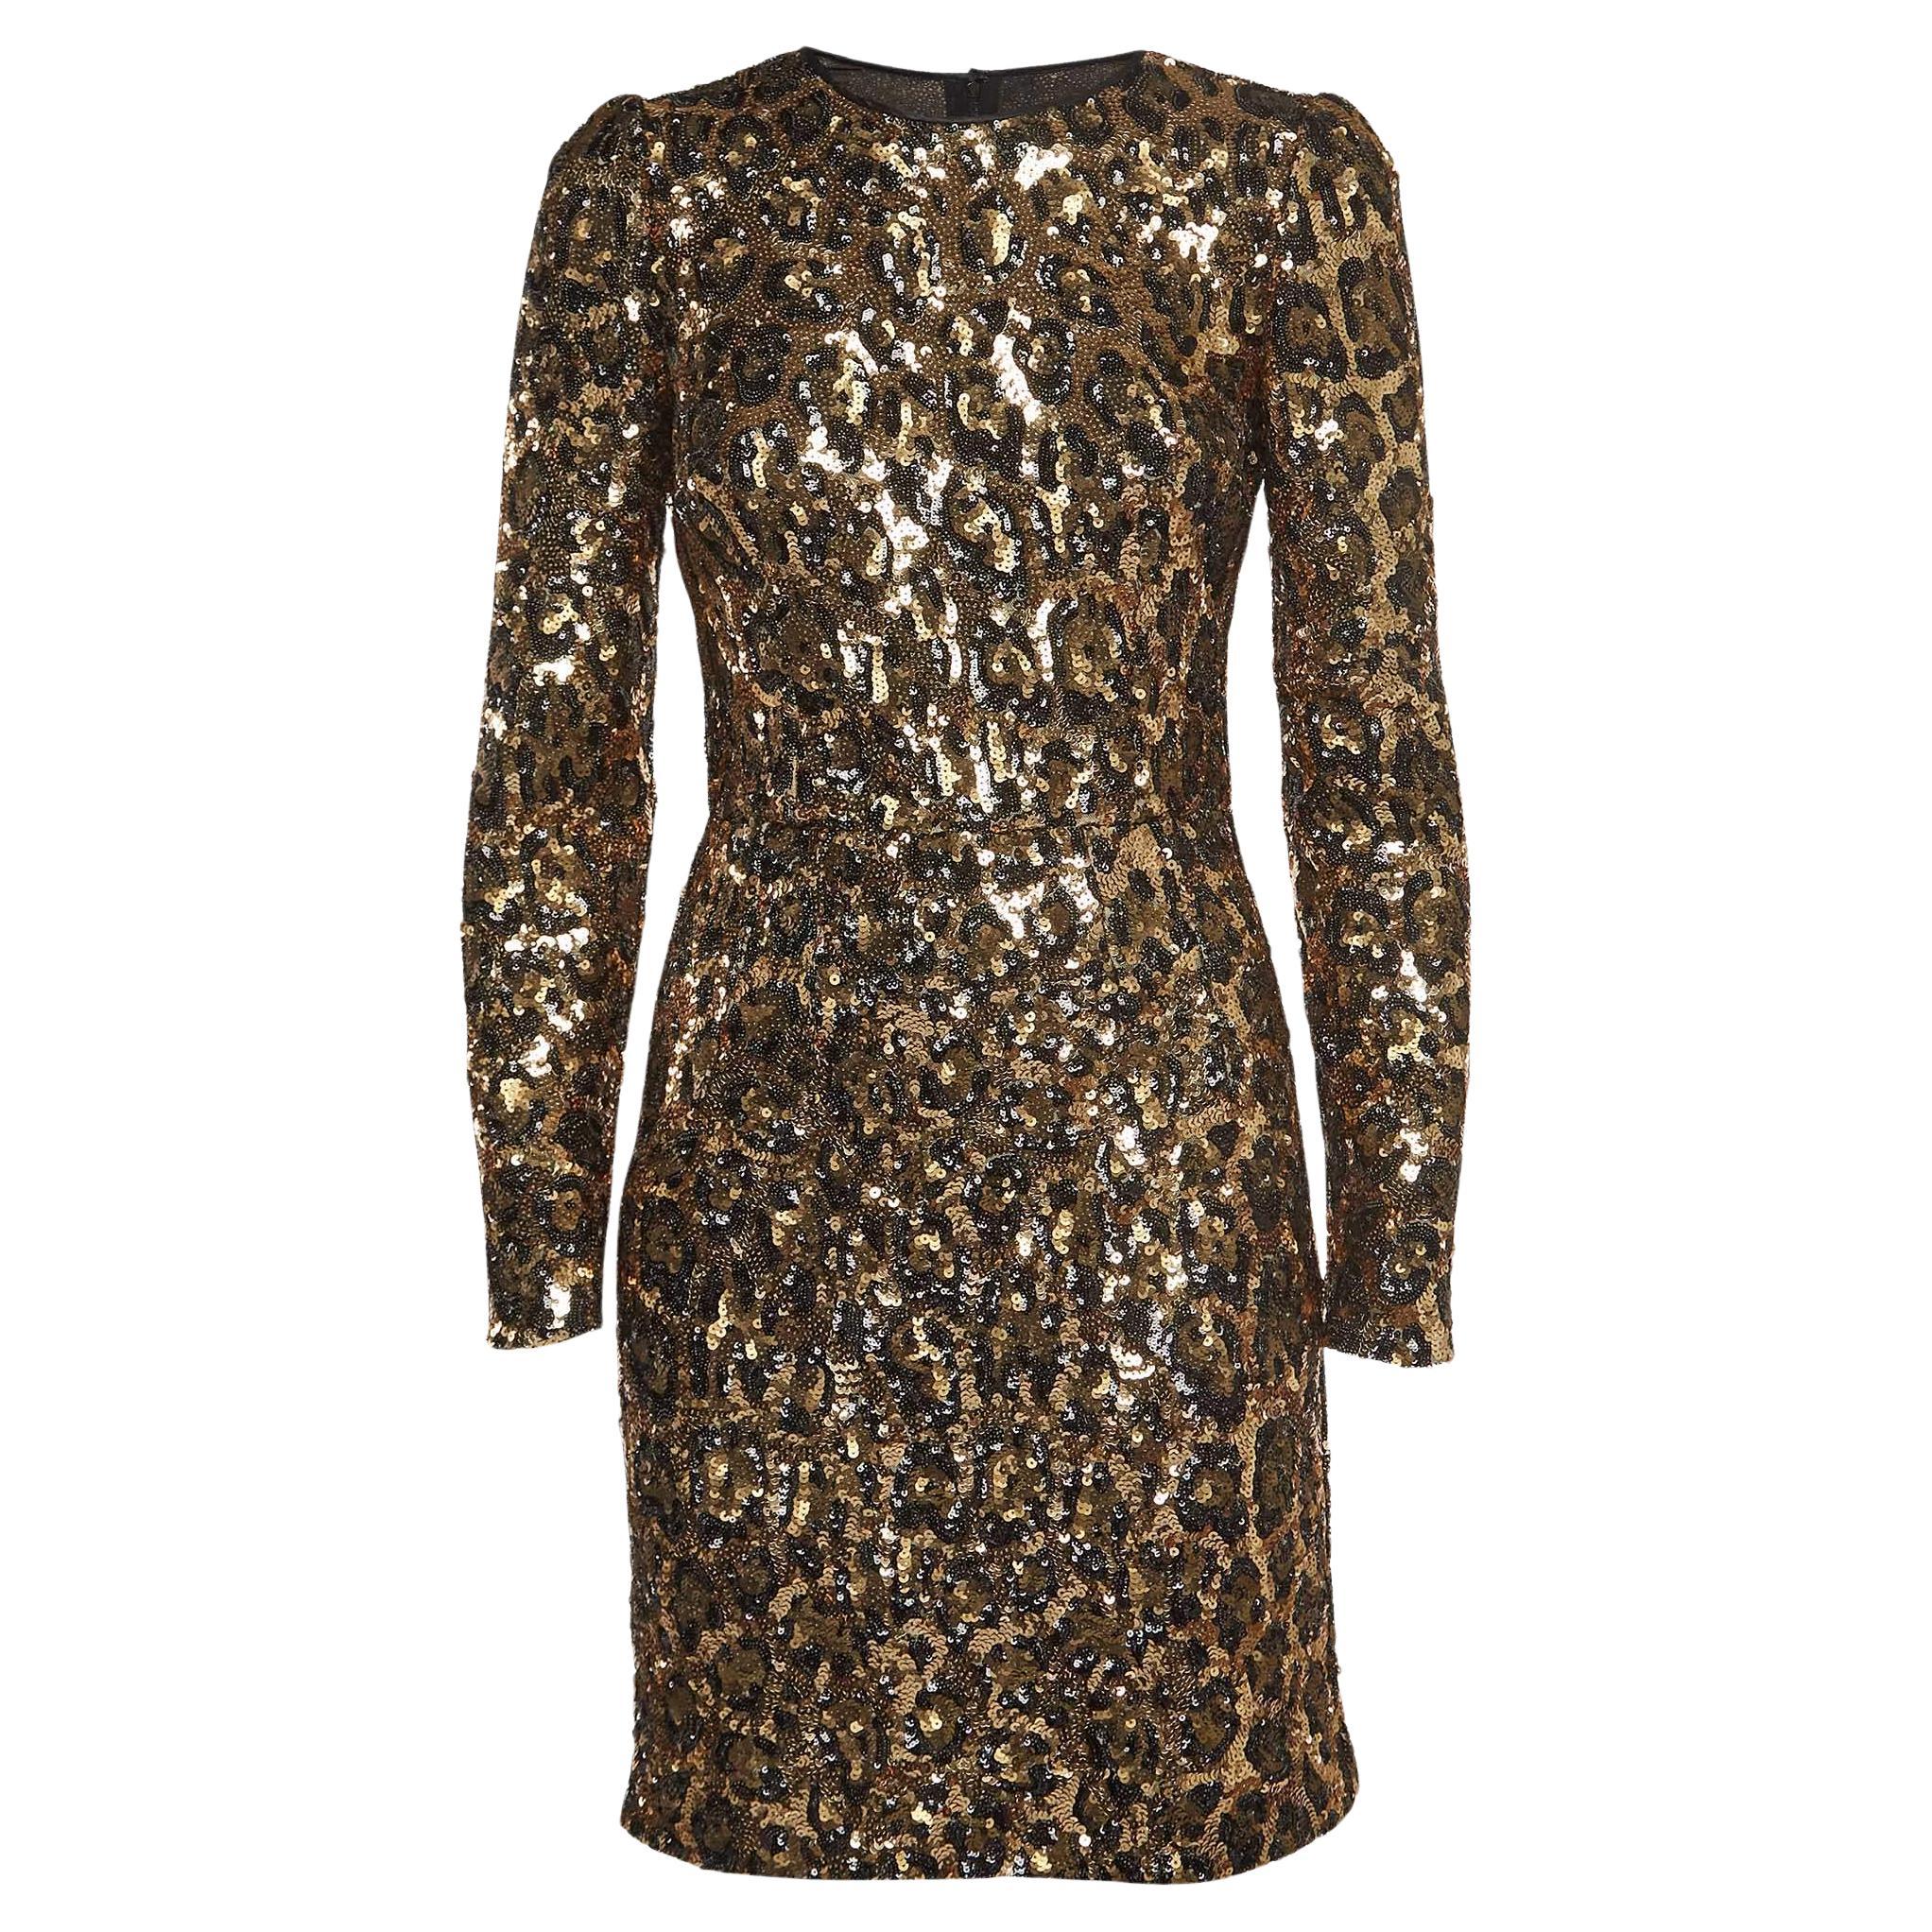 Dolce & Gabbana Gold/Black Leopard Sequined Mini Dress S